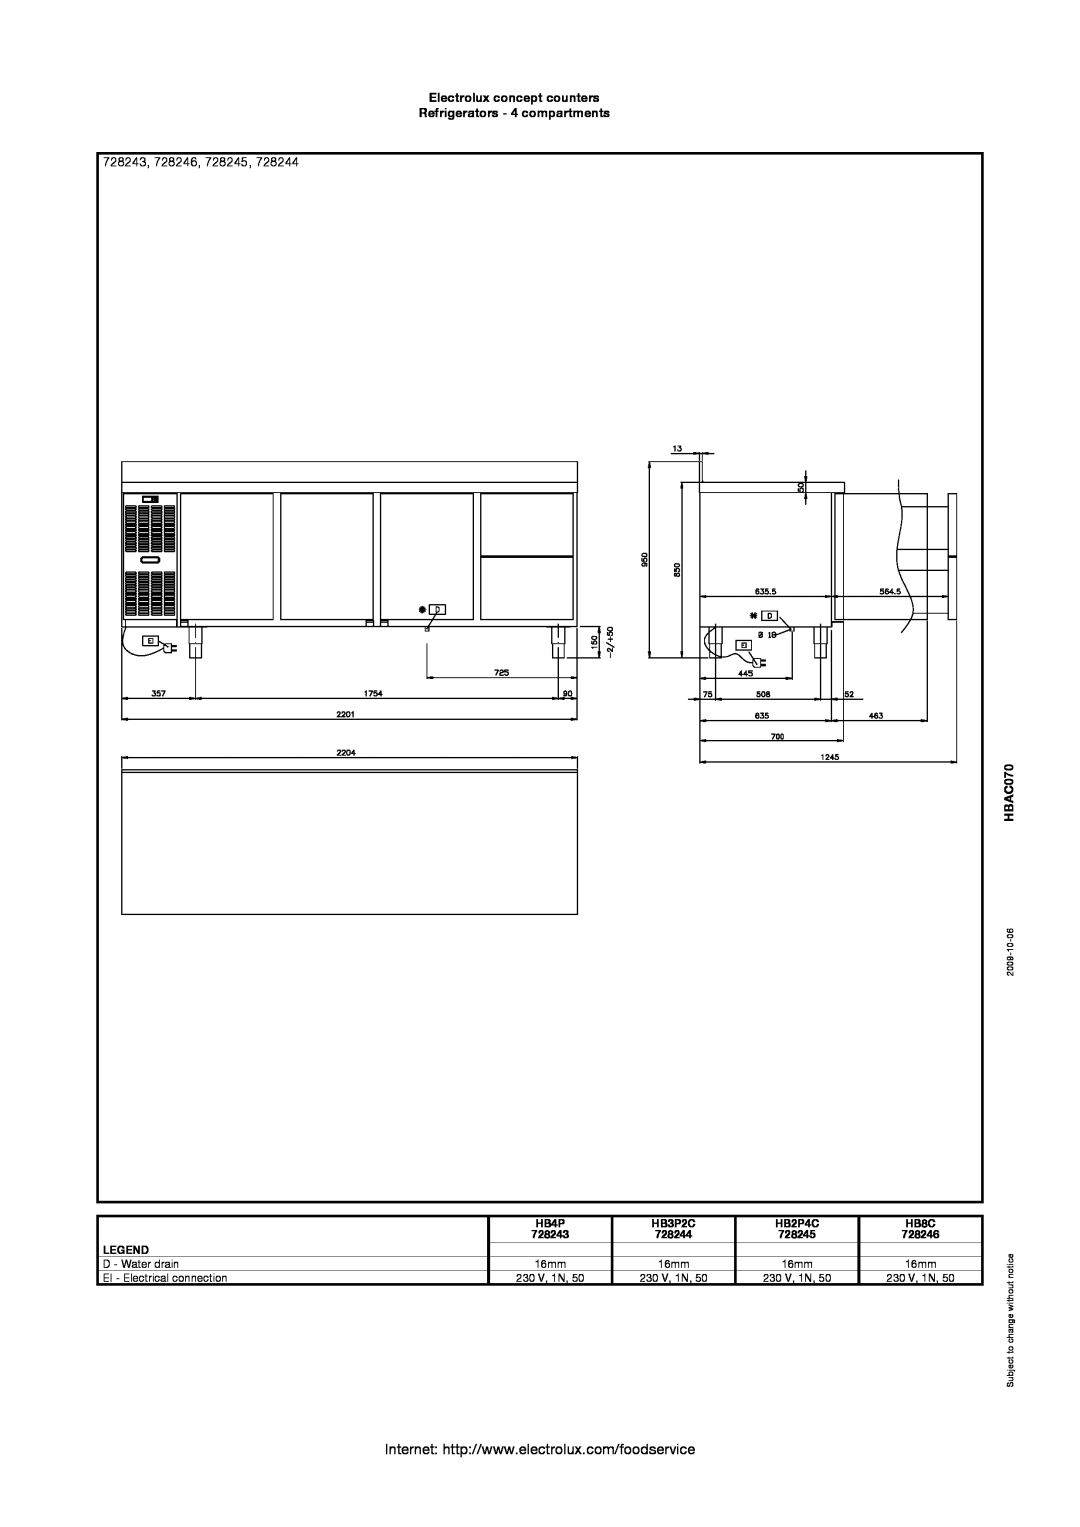 Electrolux 727107, HB4P 728243, 728246, Electrolux concept counters Refrigerators - 4 compartments, HBAC070, 2009-10-06 